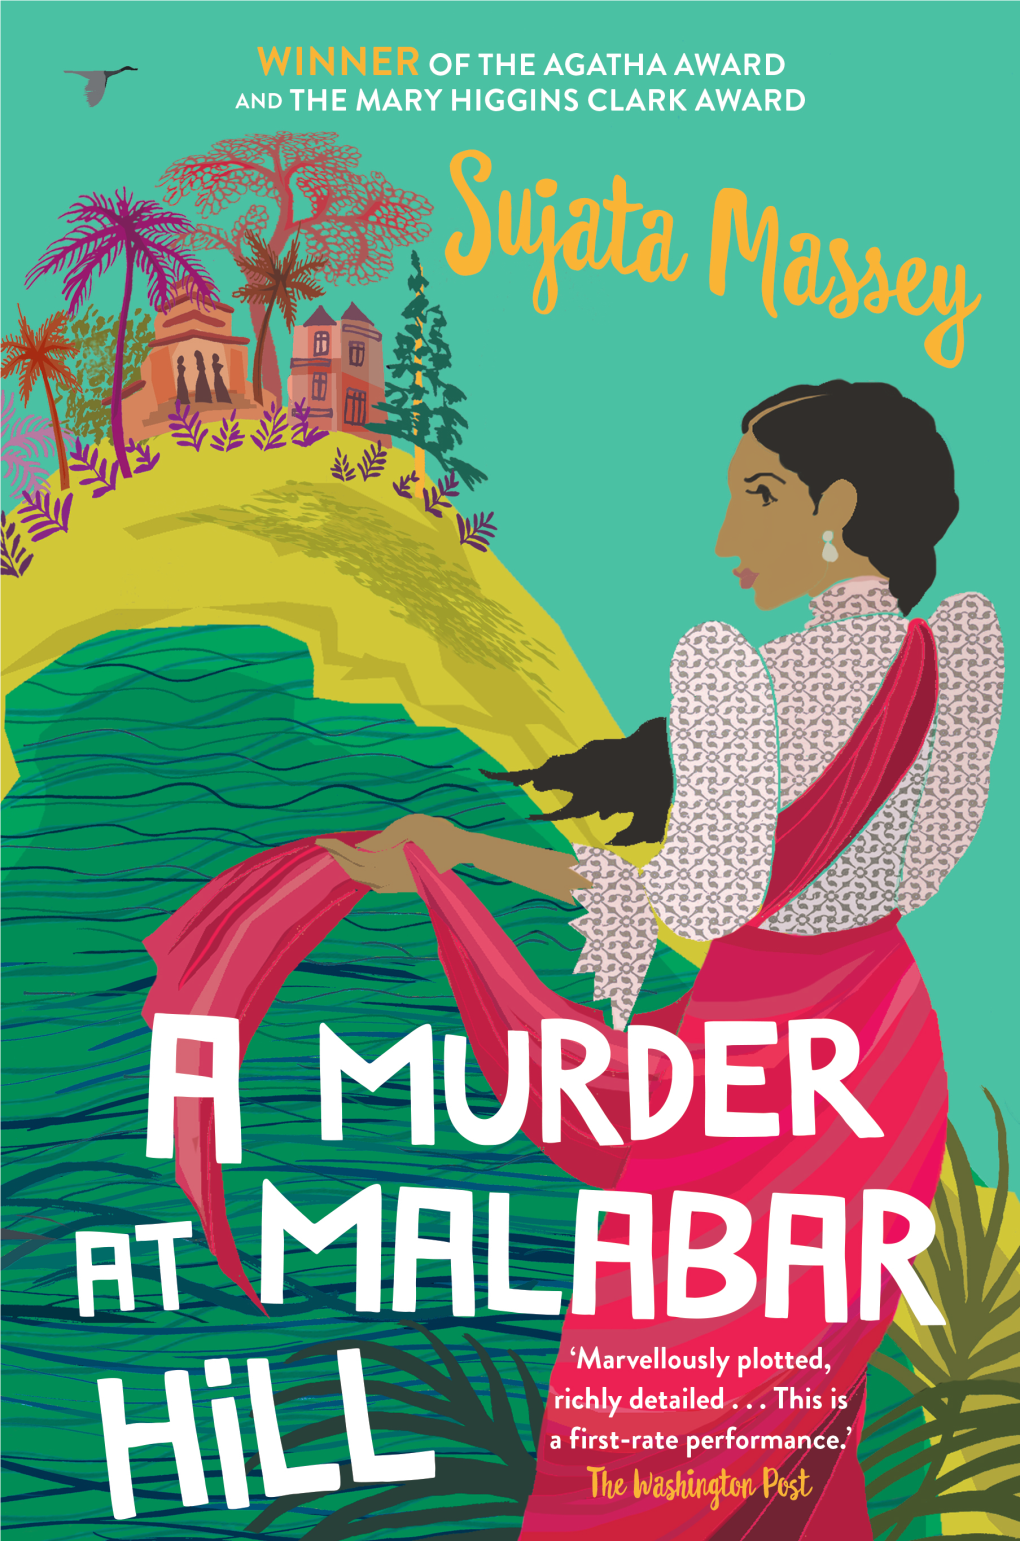 A Murder at Malabar Hill